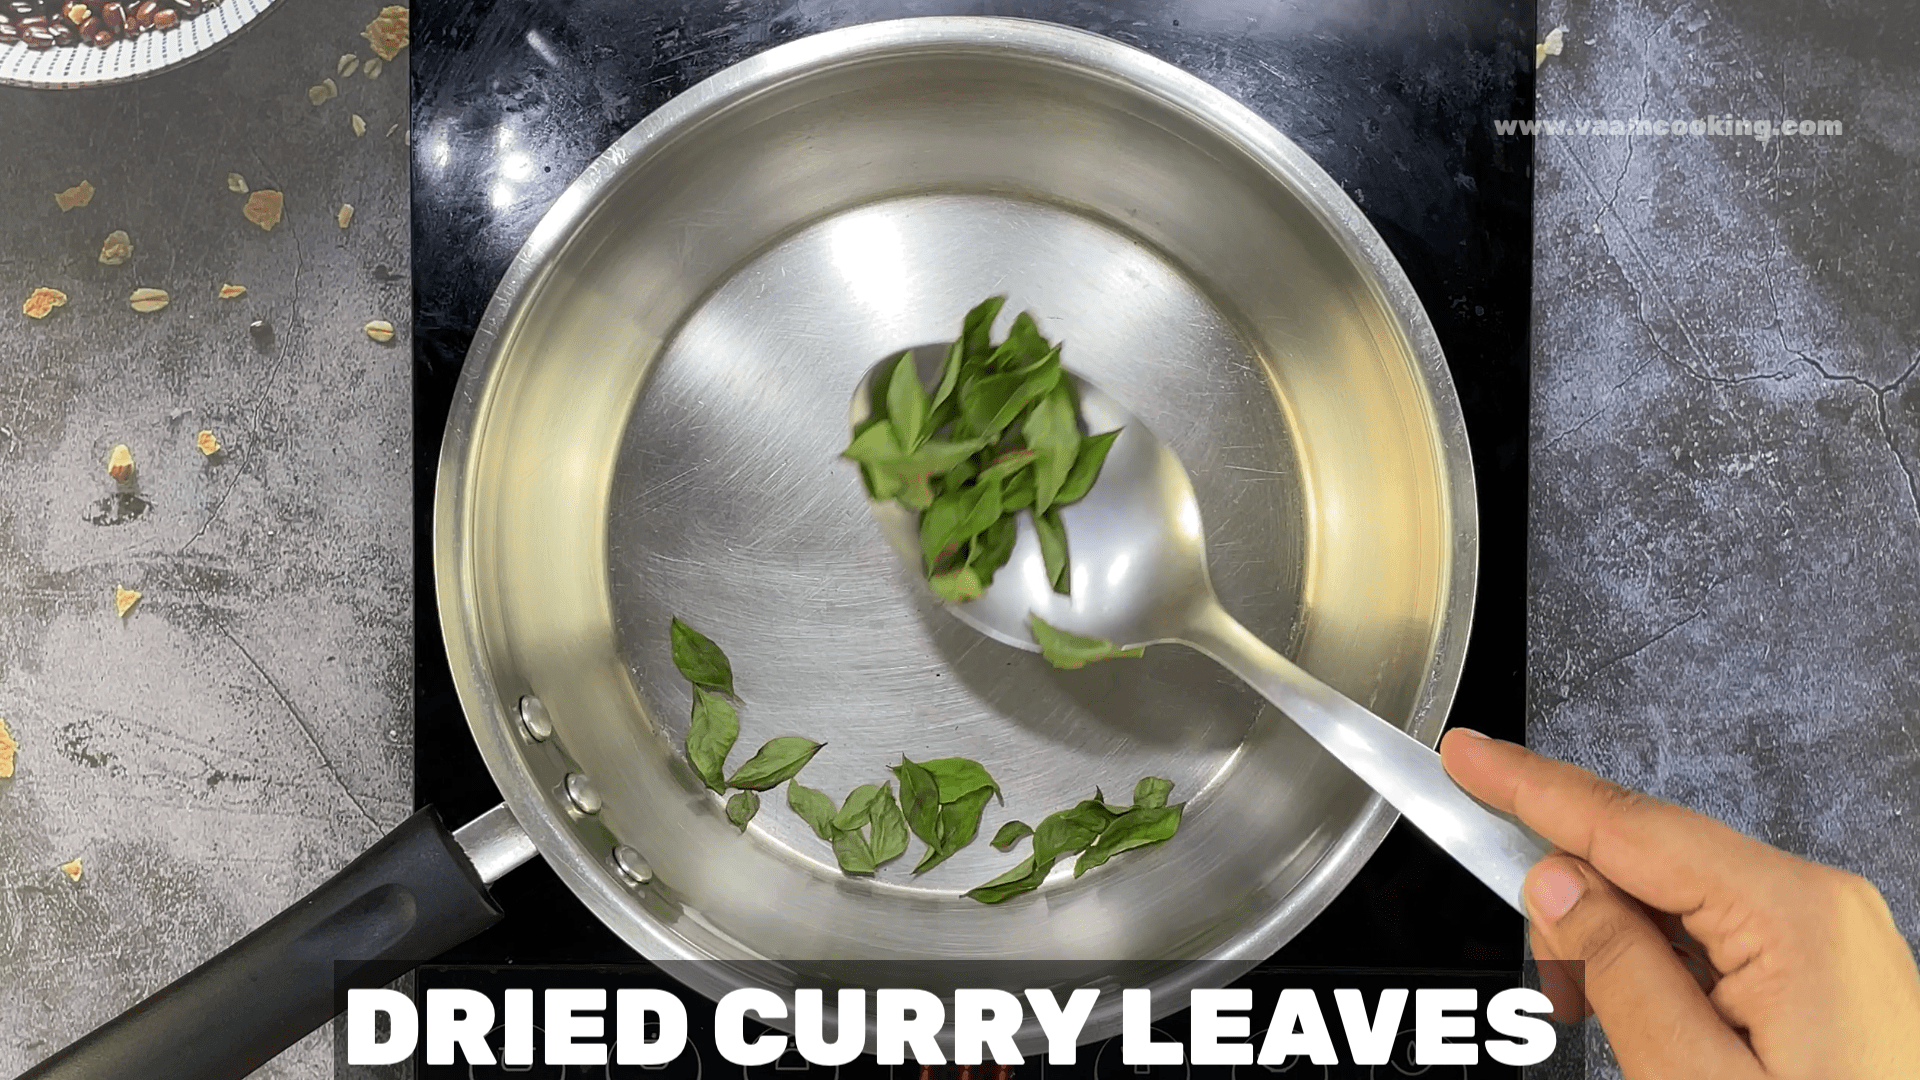 Putani-Chutney-dried curry leaves